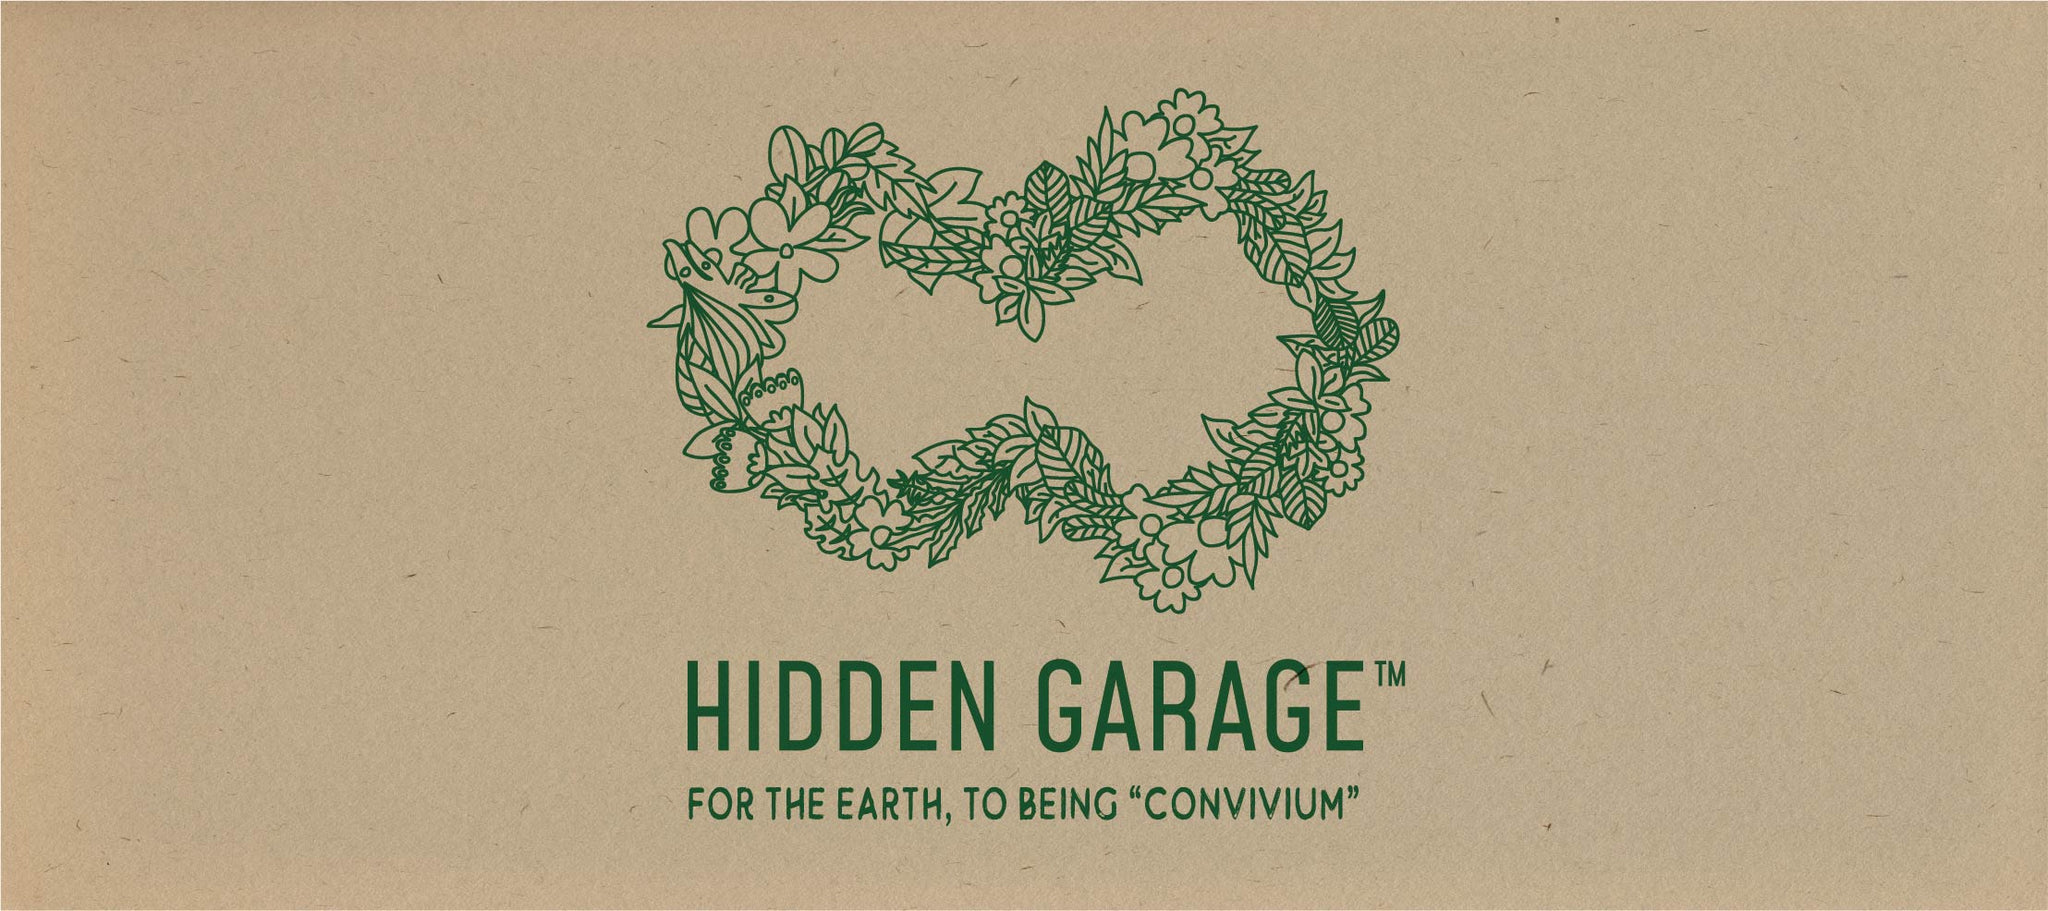 sostenibilità hidden garage desktop